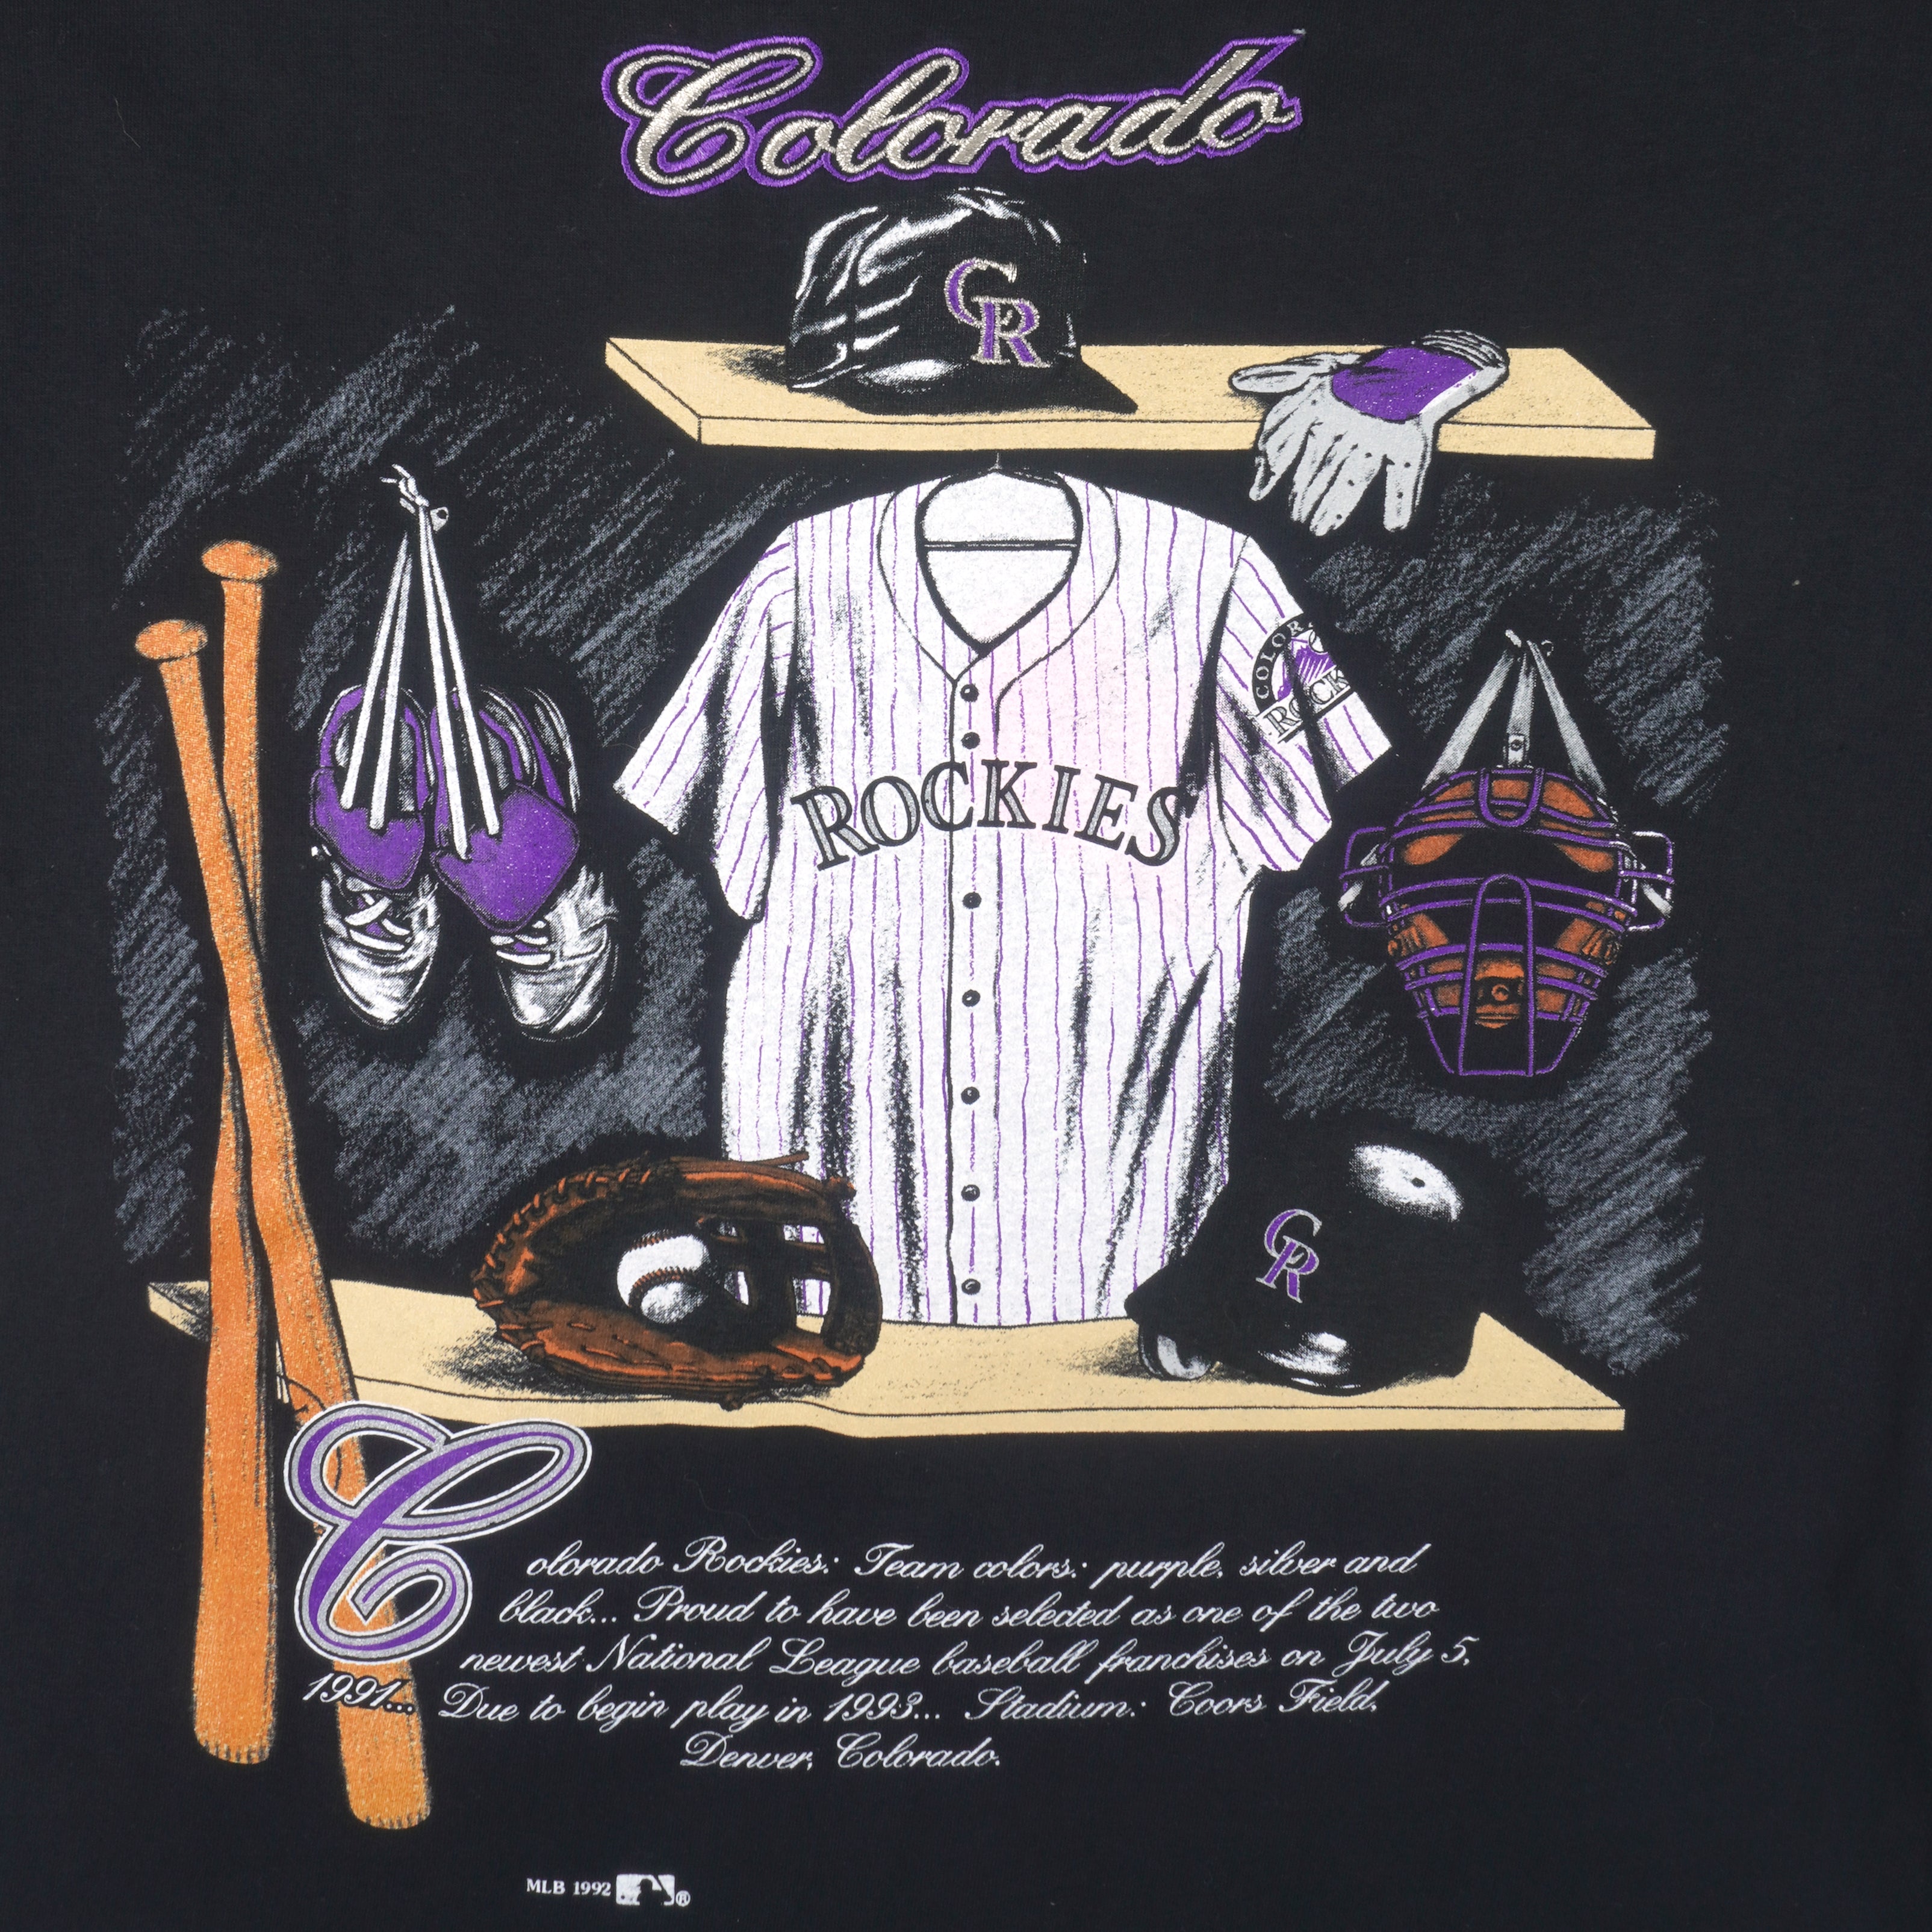 Vintage MLB Colorado Rockies Shirt Salem Sportswear Tee USA Size Large